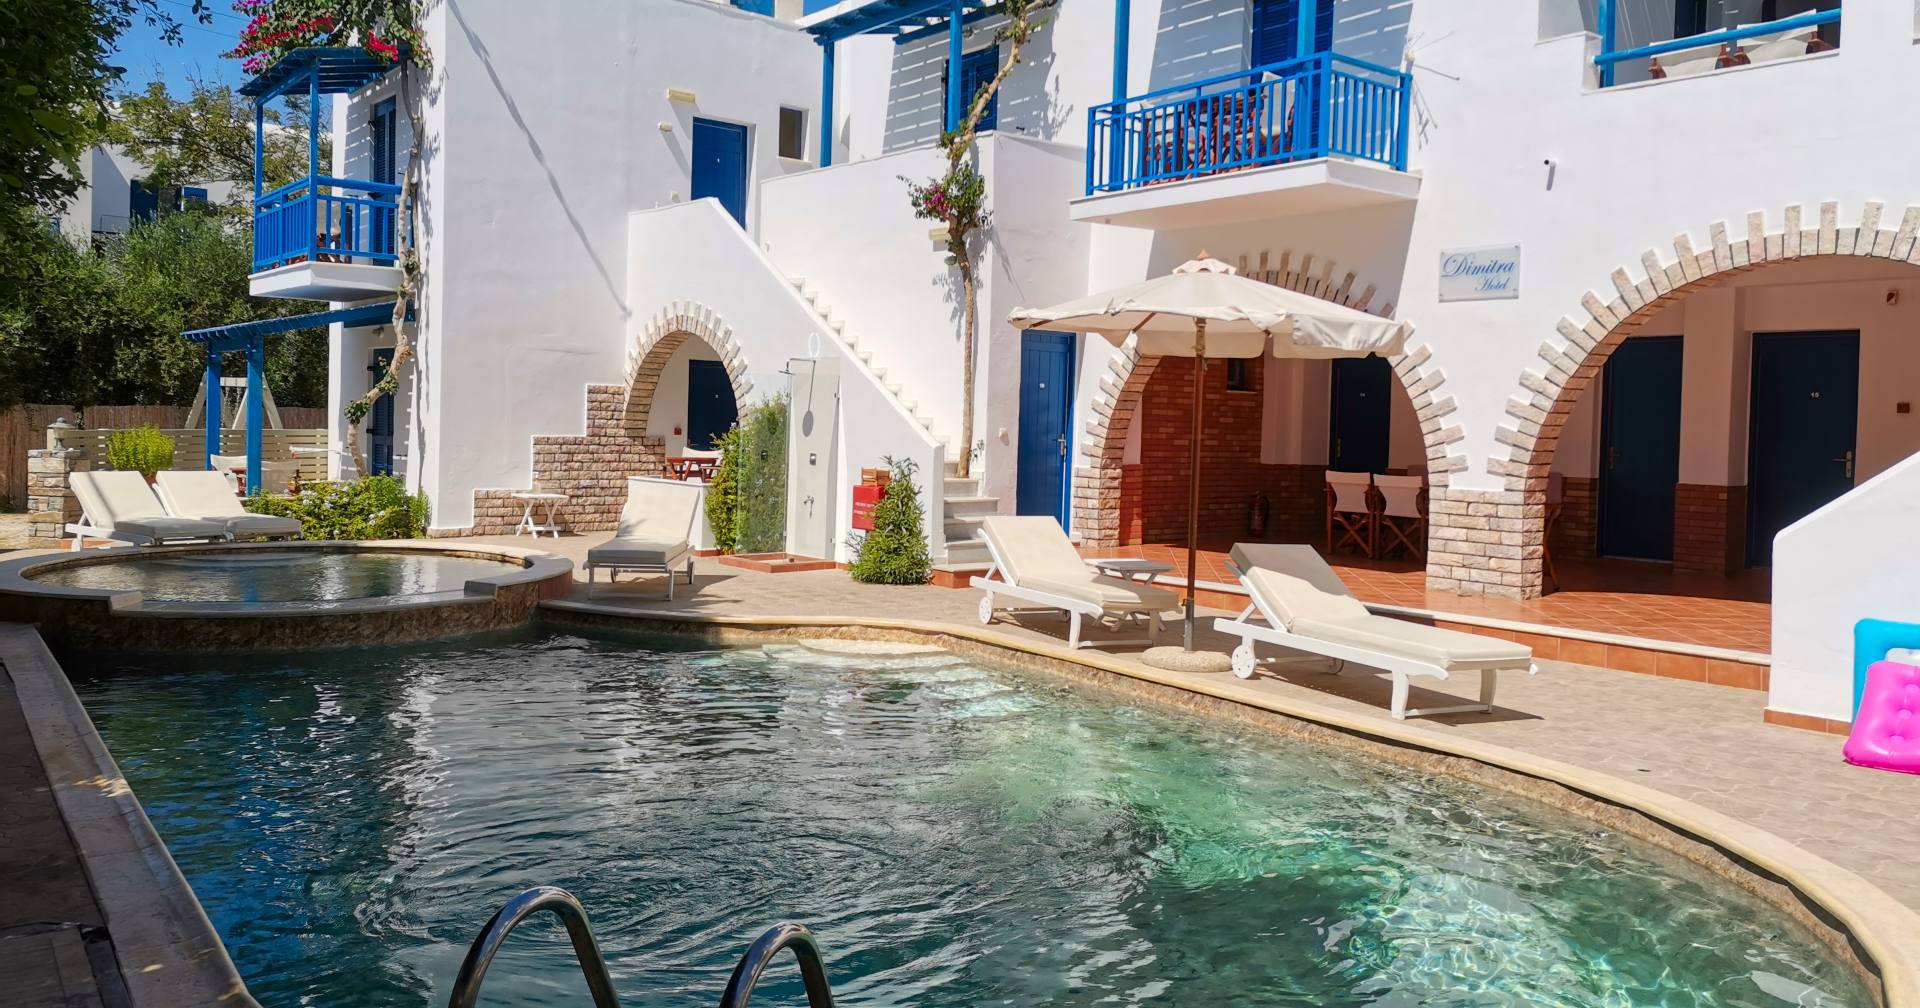 Dimitra Hotel in Naxos Cyclades